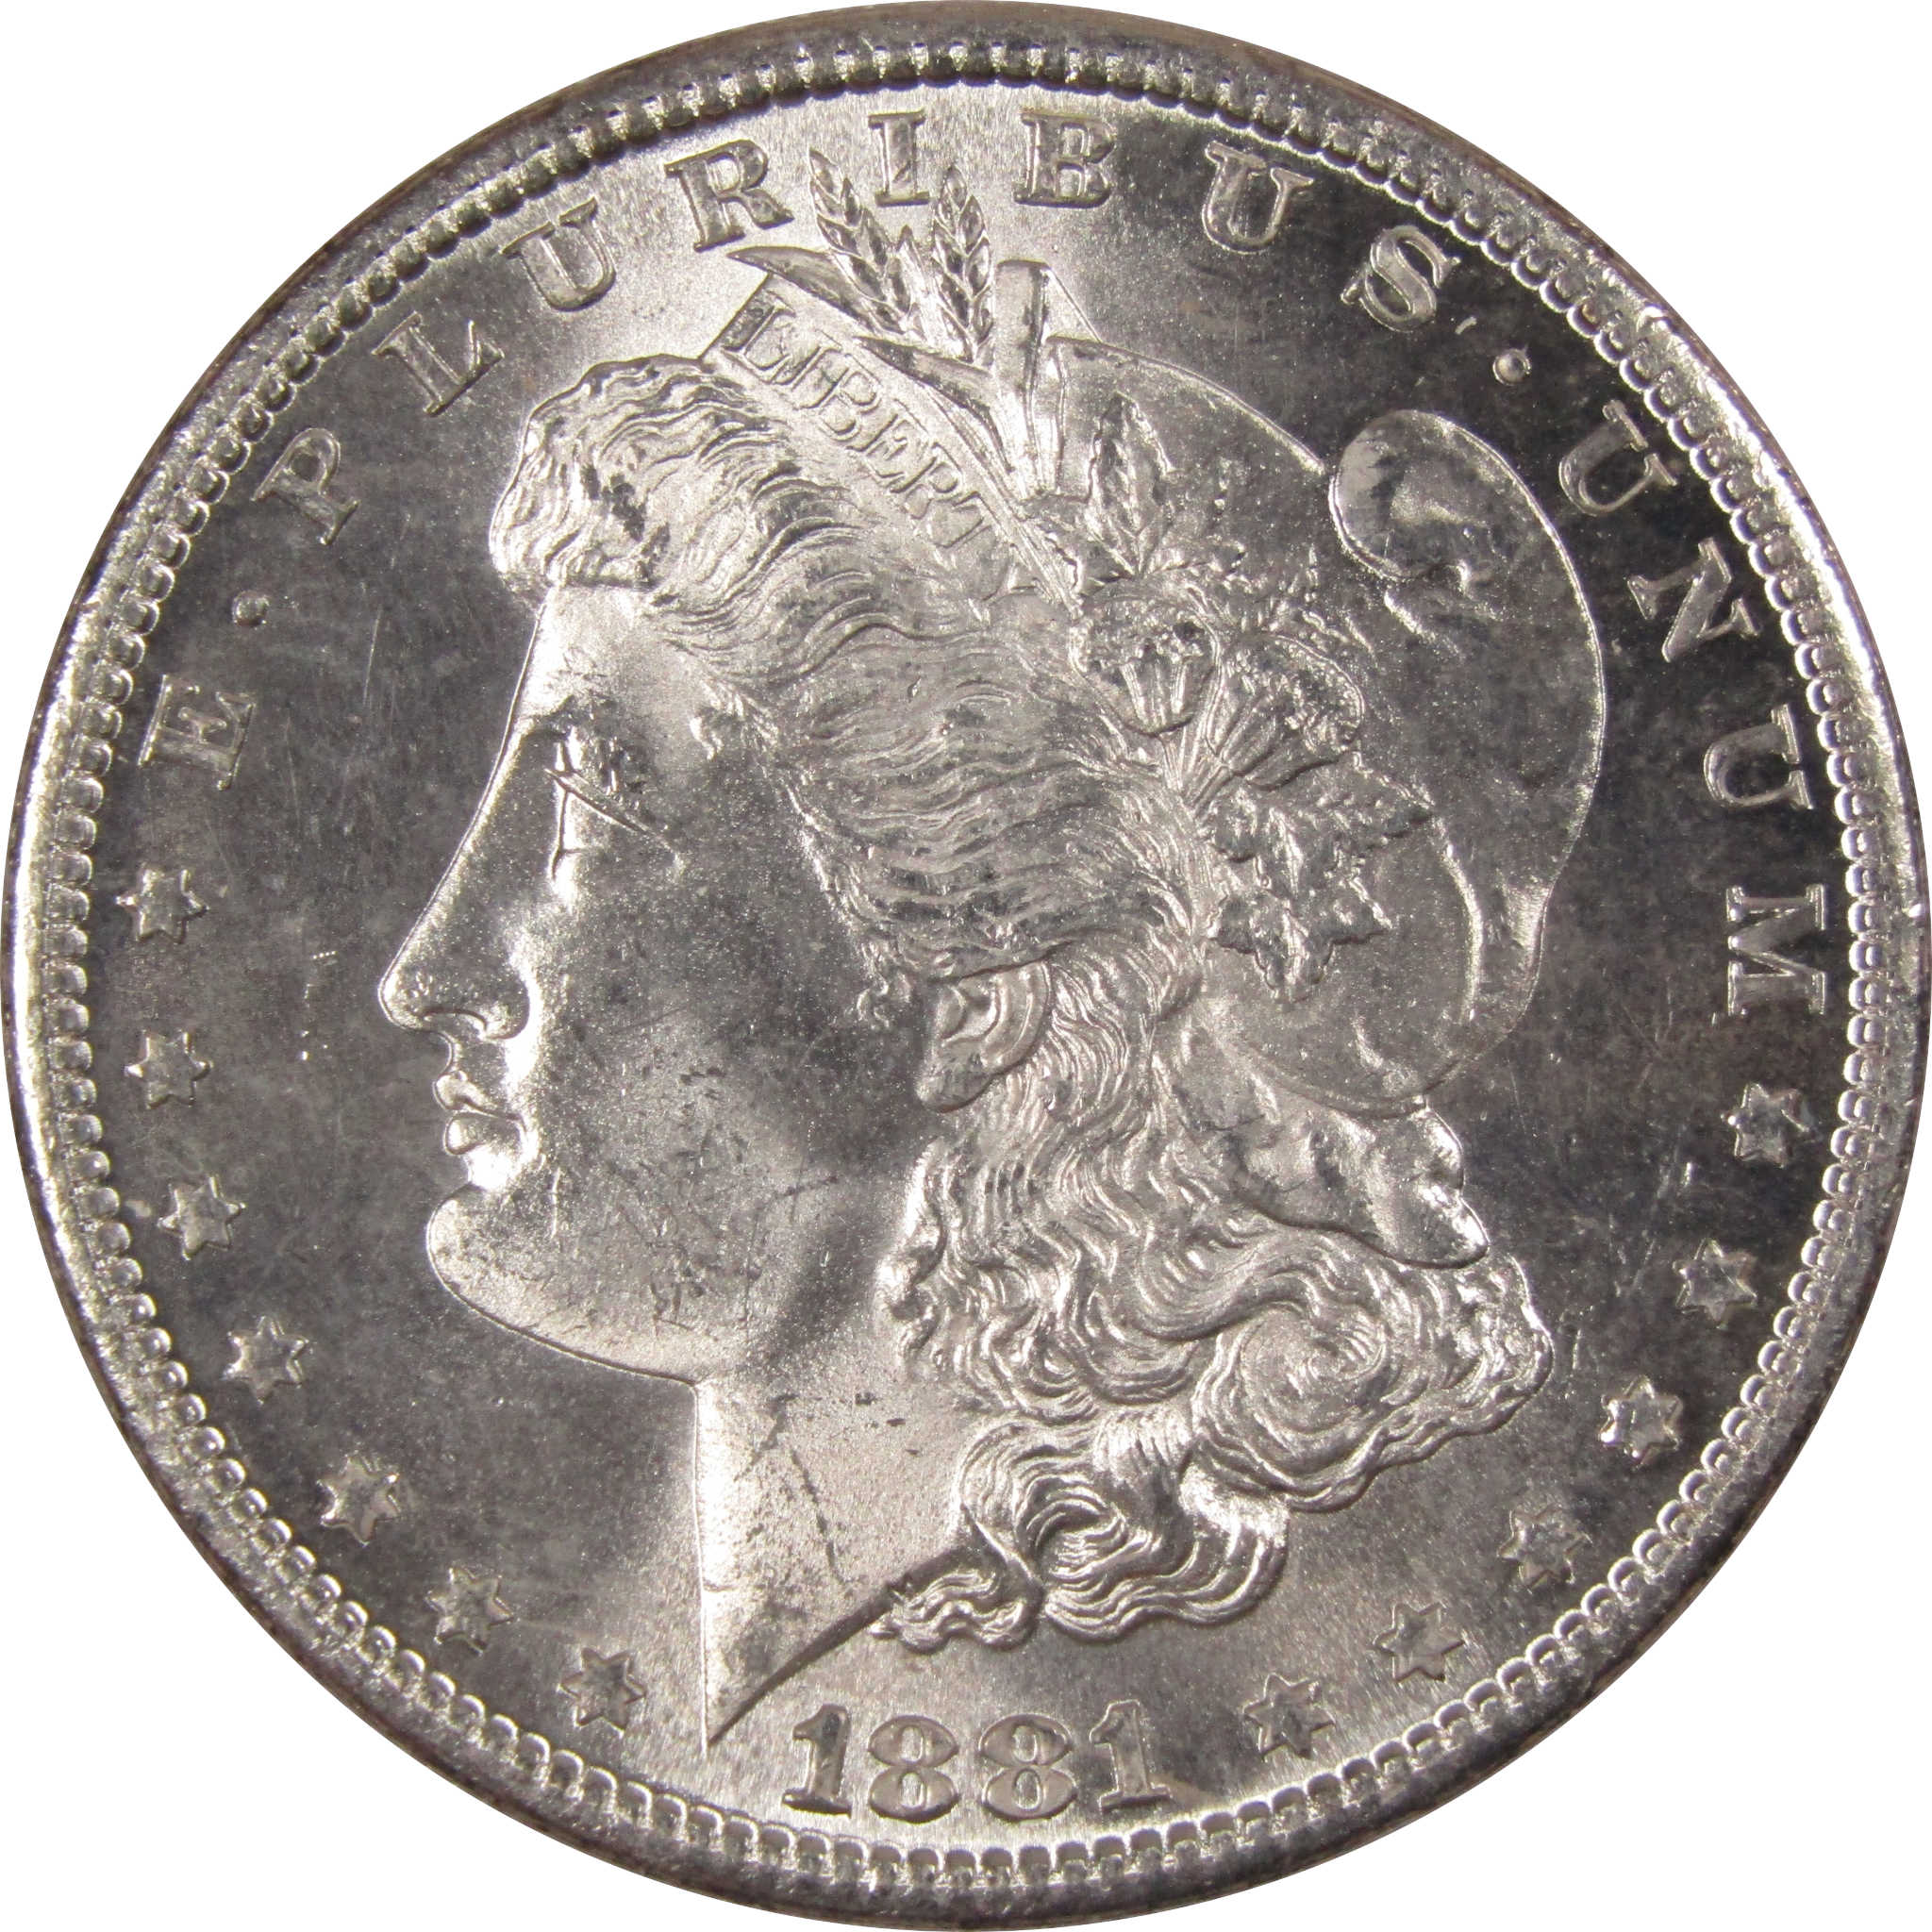 1881 S Morgan Dollar BU Very Choice Uncirculated Silver SKU:IPC7033 - Morgan coin - Morgan silver dollar - Morgan silver dollar for sale - Profile Coins &amp; Collectibles